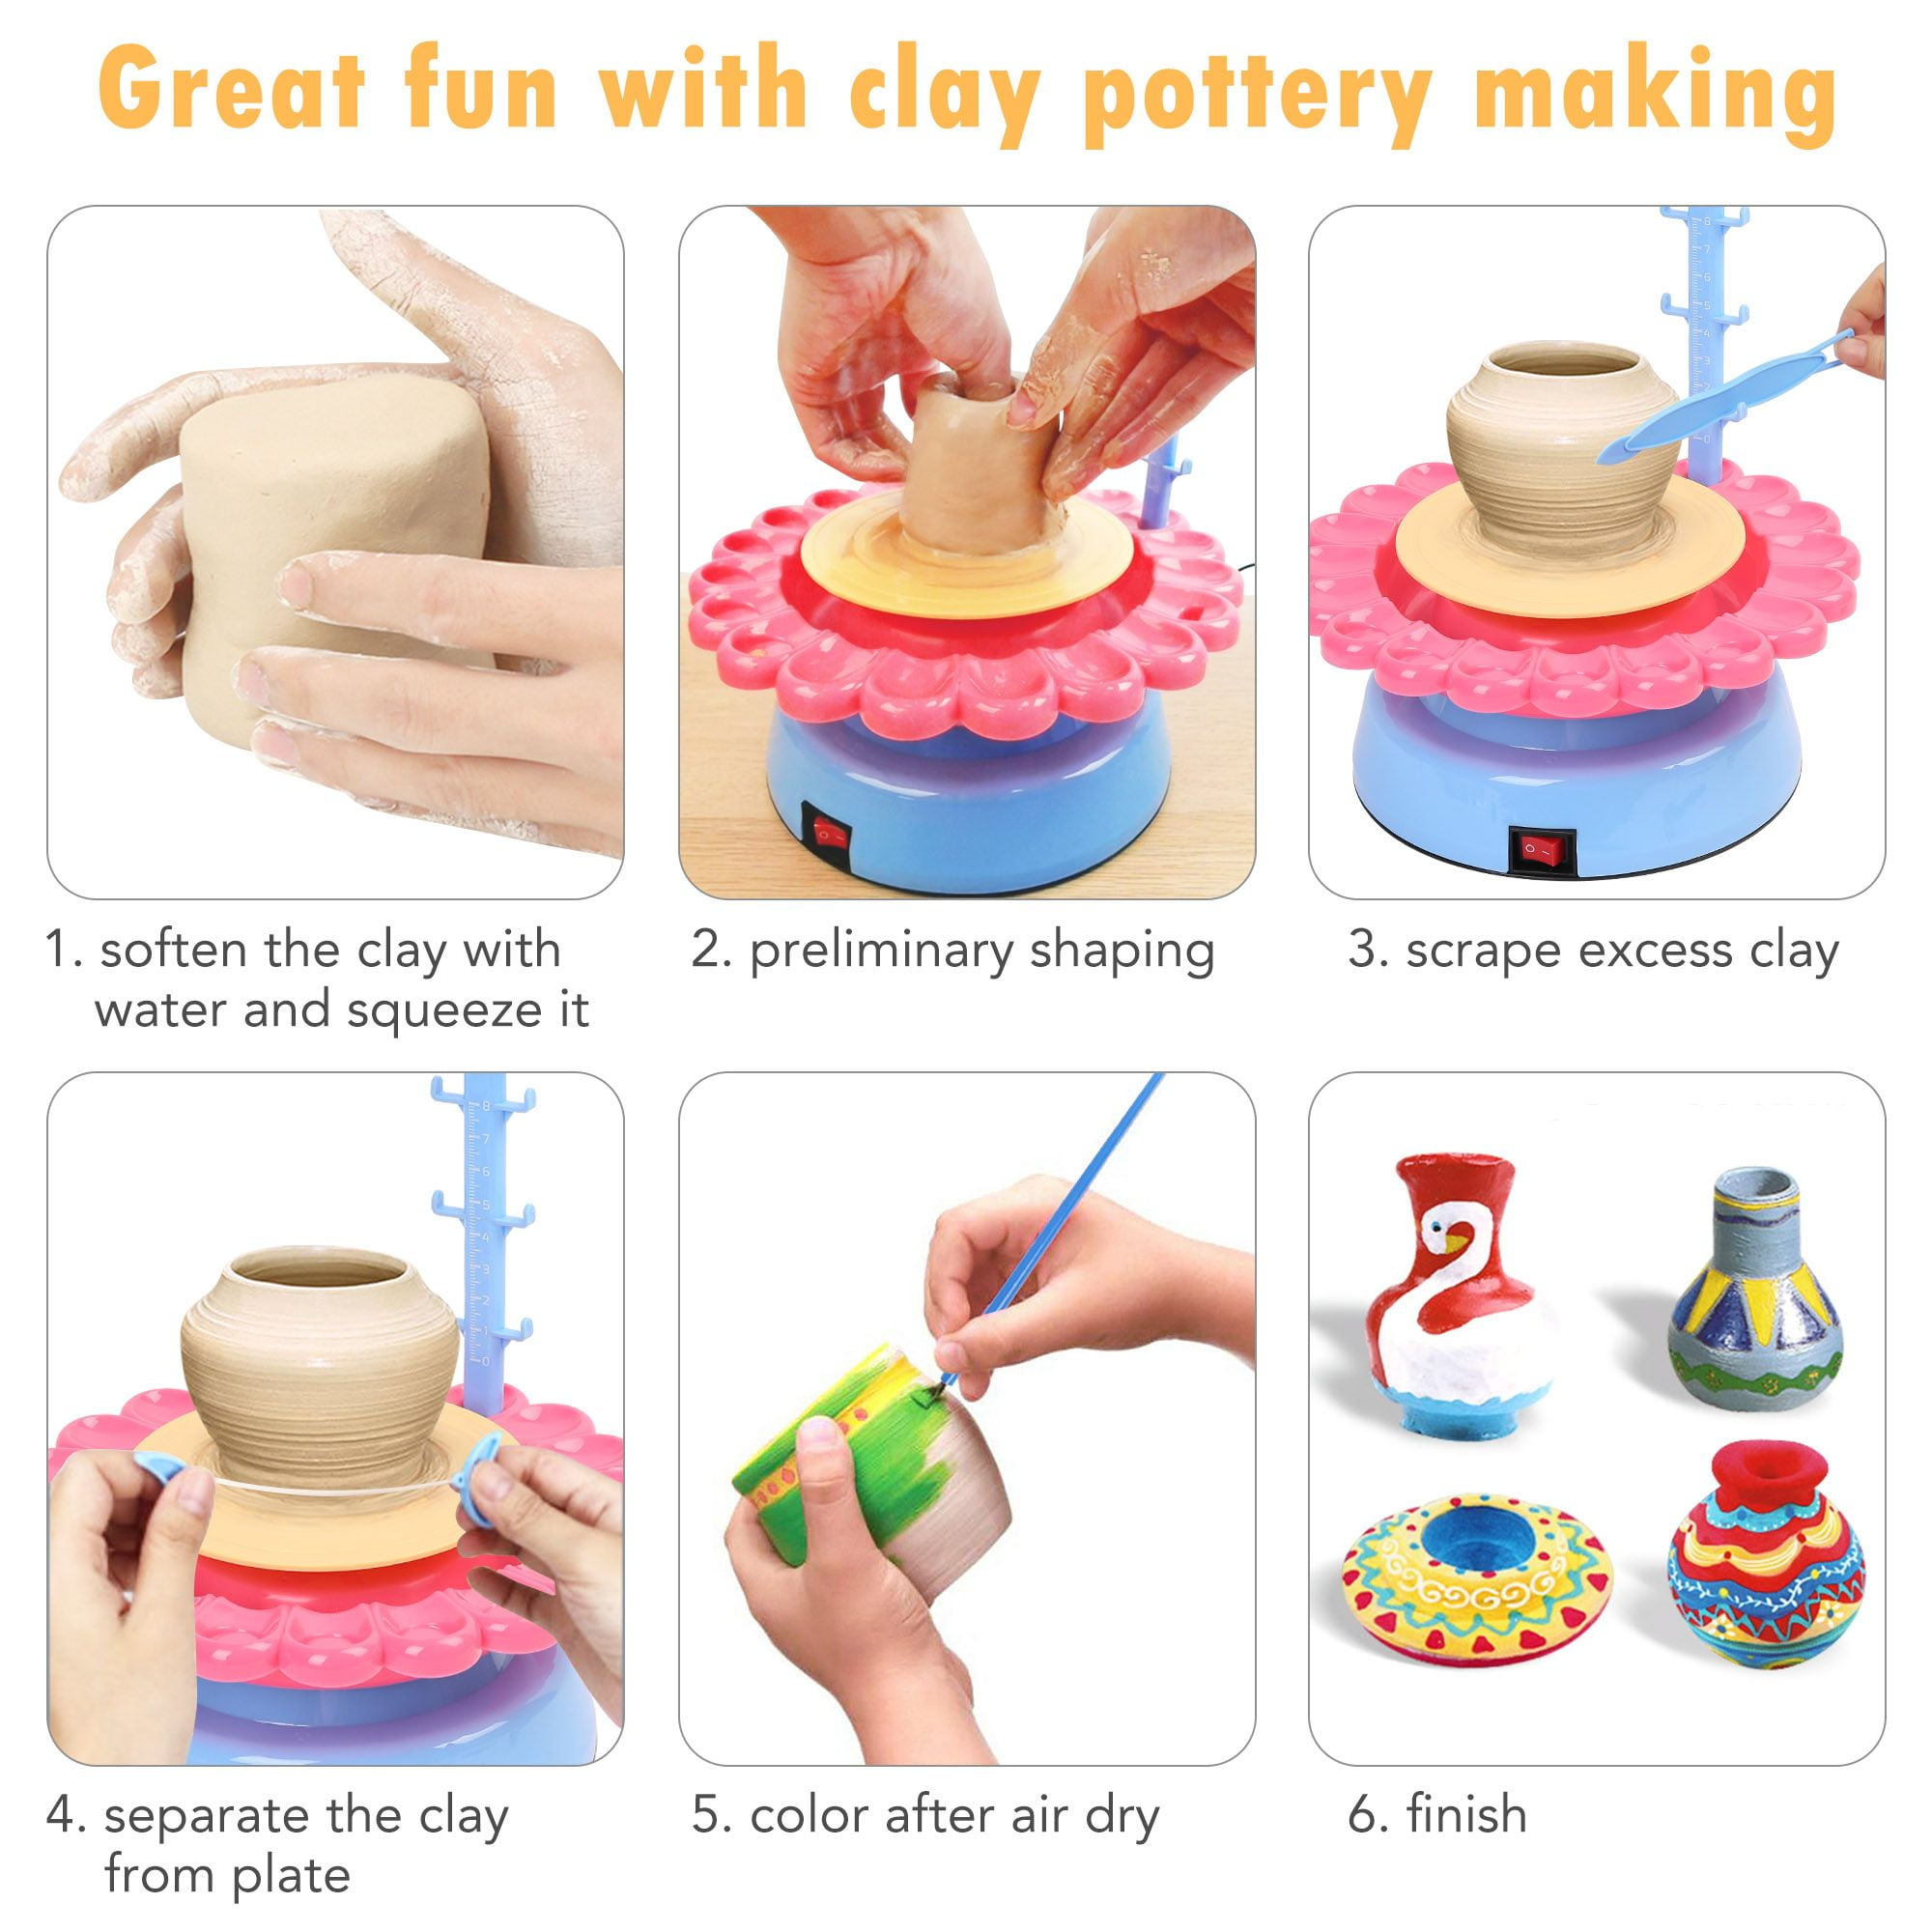 Pottery Wheel – Turner Toys